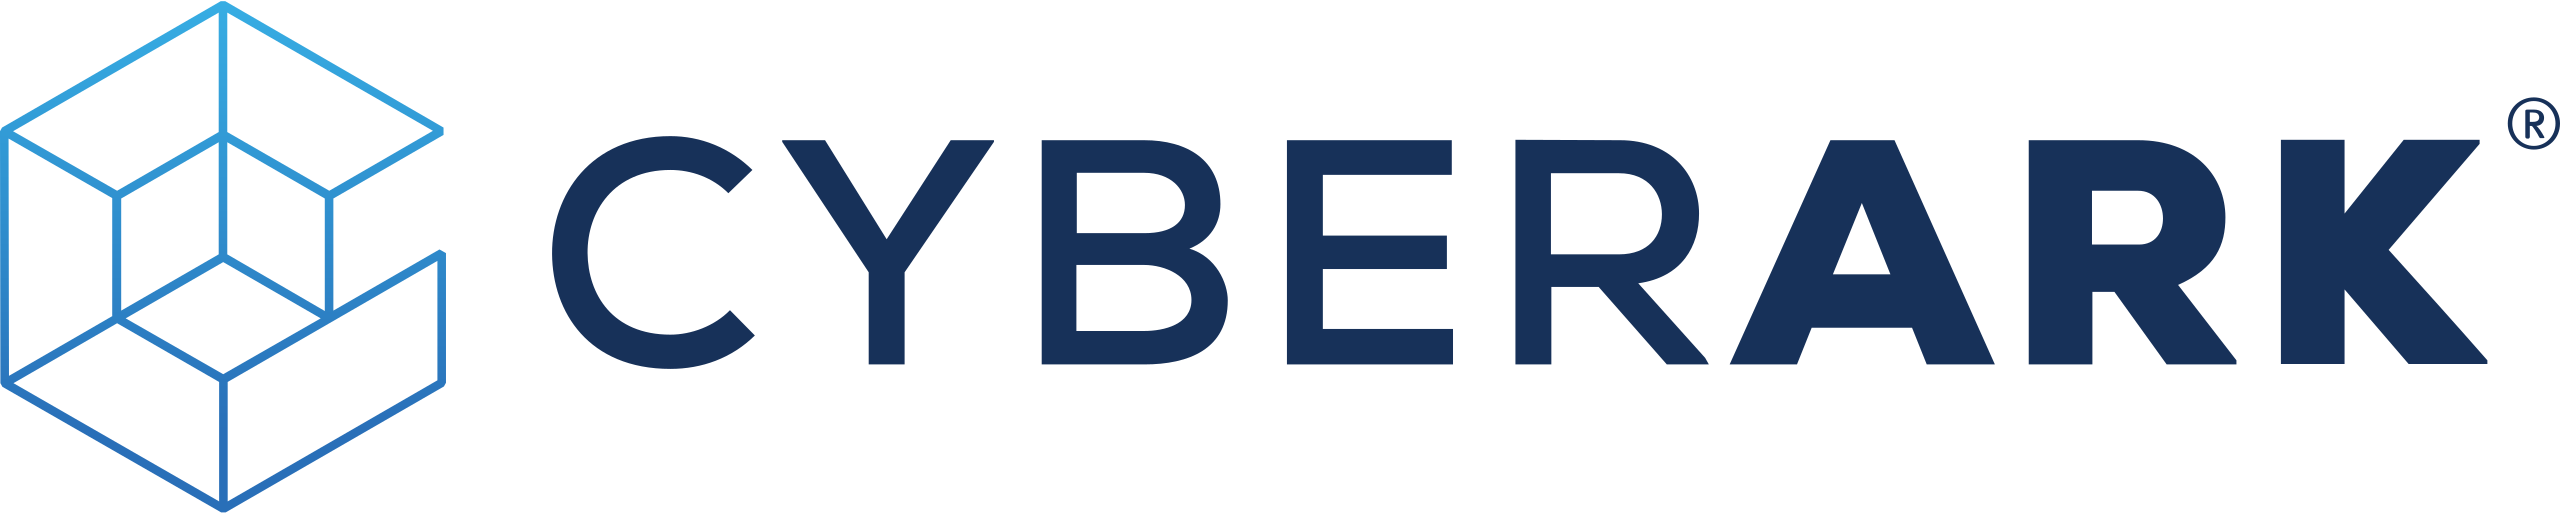 Cyberark-logo